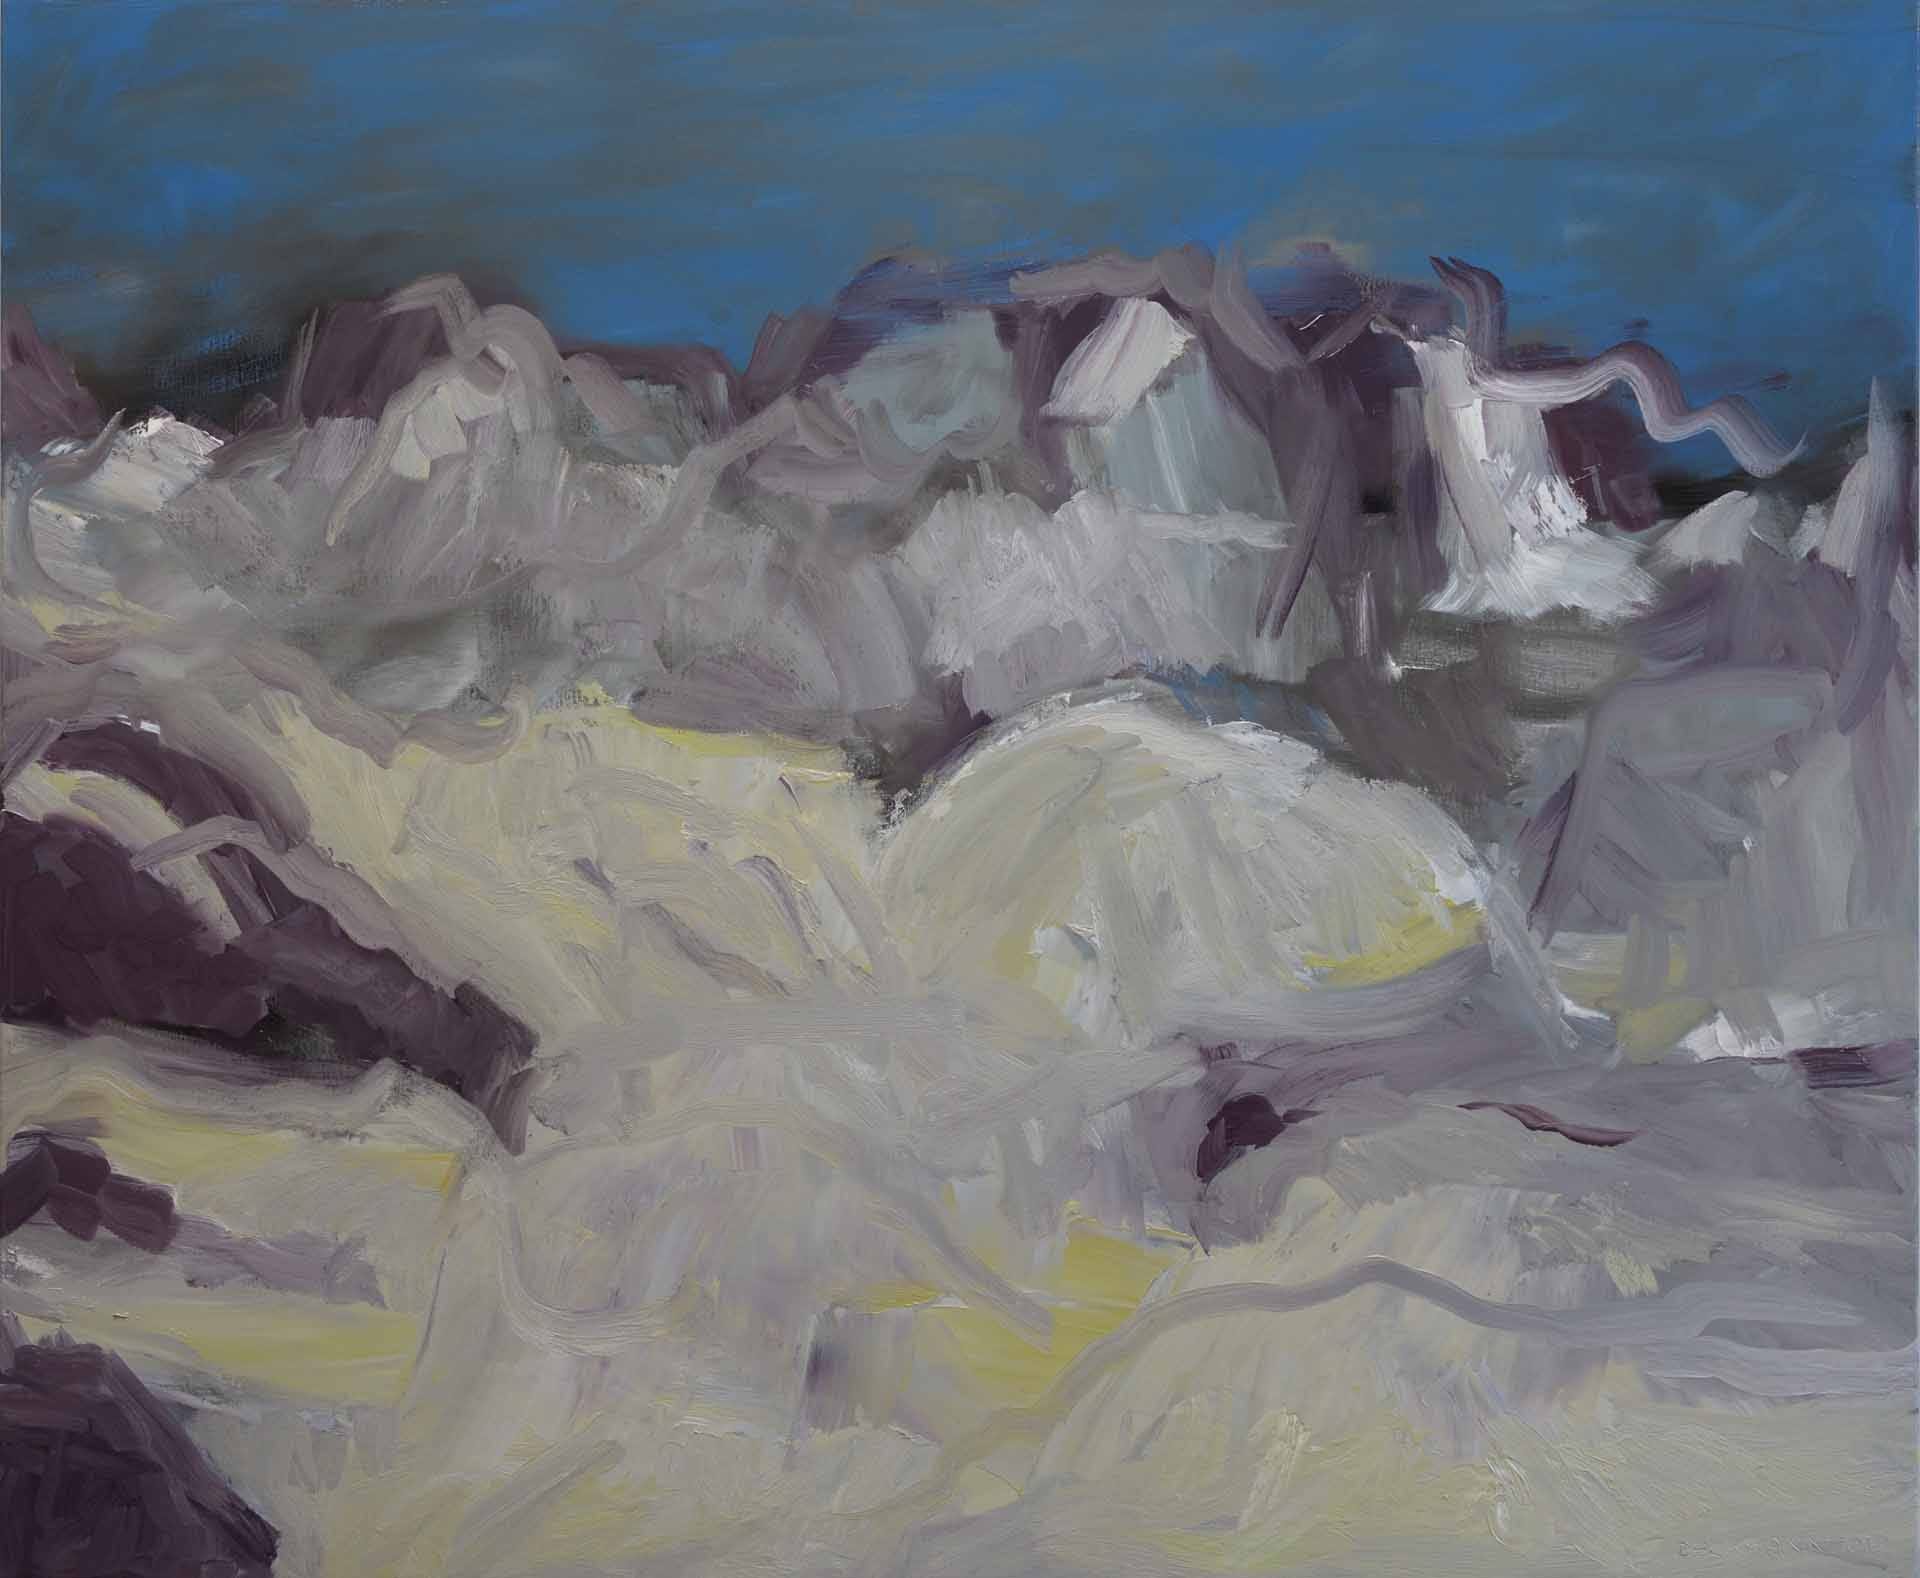 Sabine Beckmann, Heights, oil on linen, 100 x 120 cm, 2012